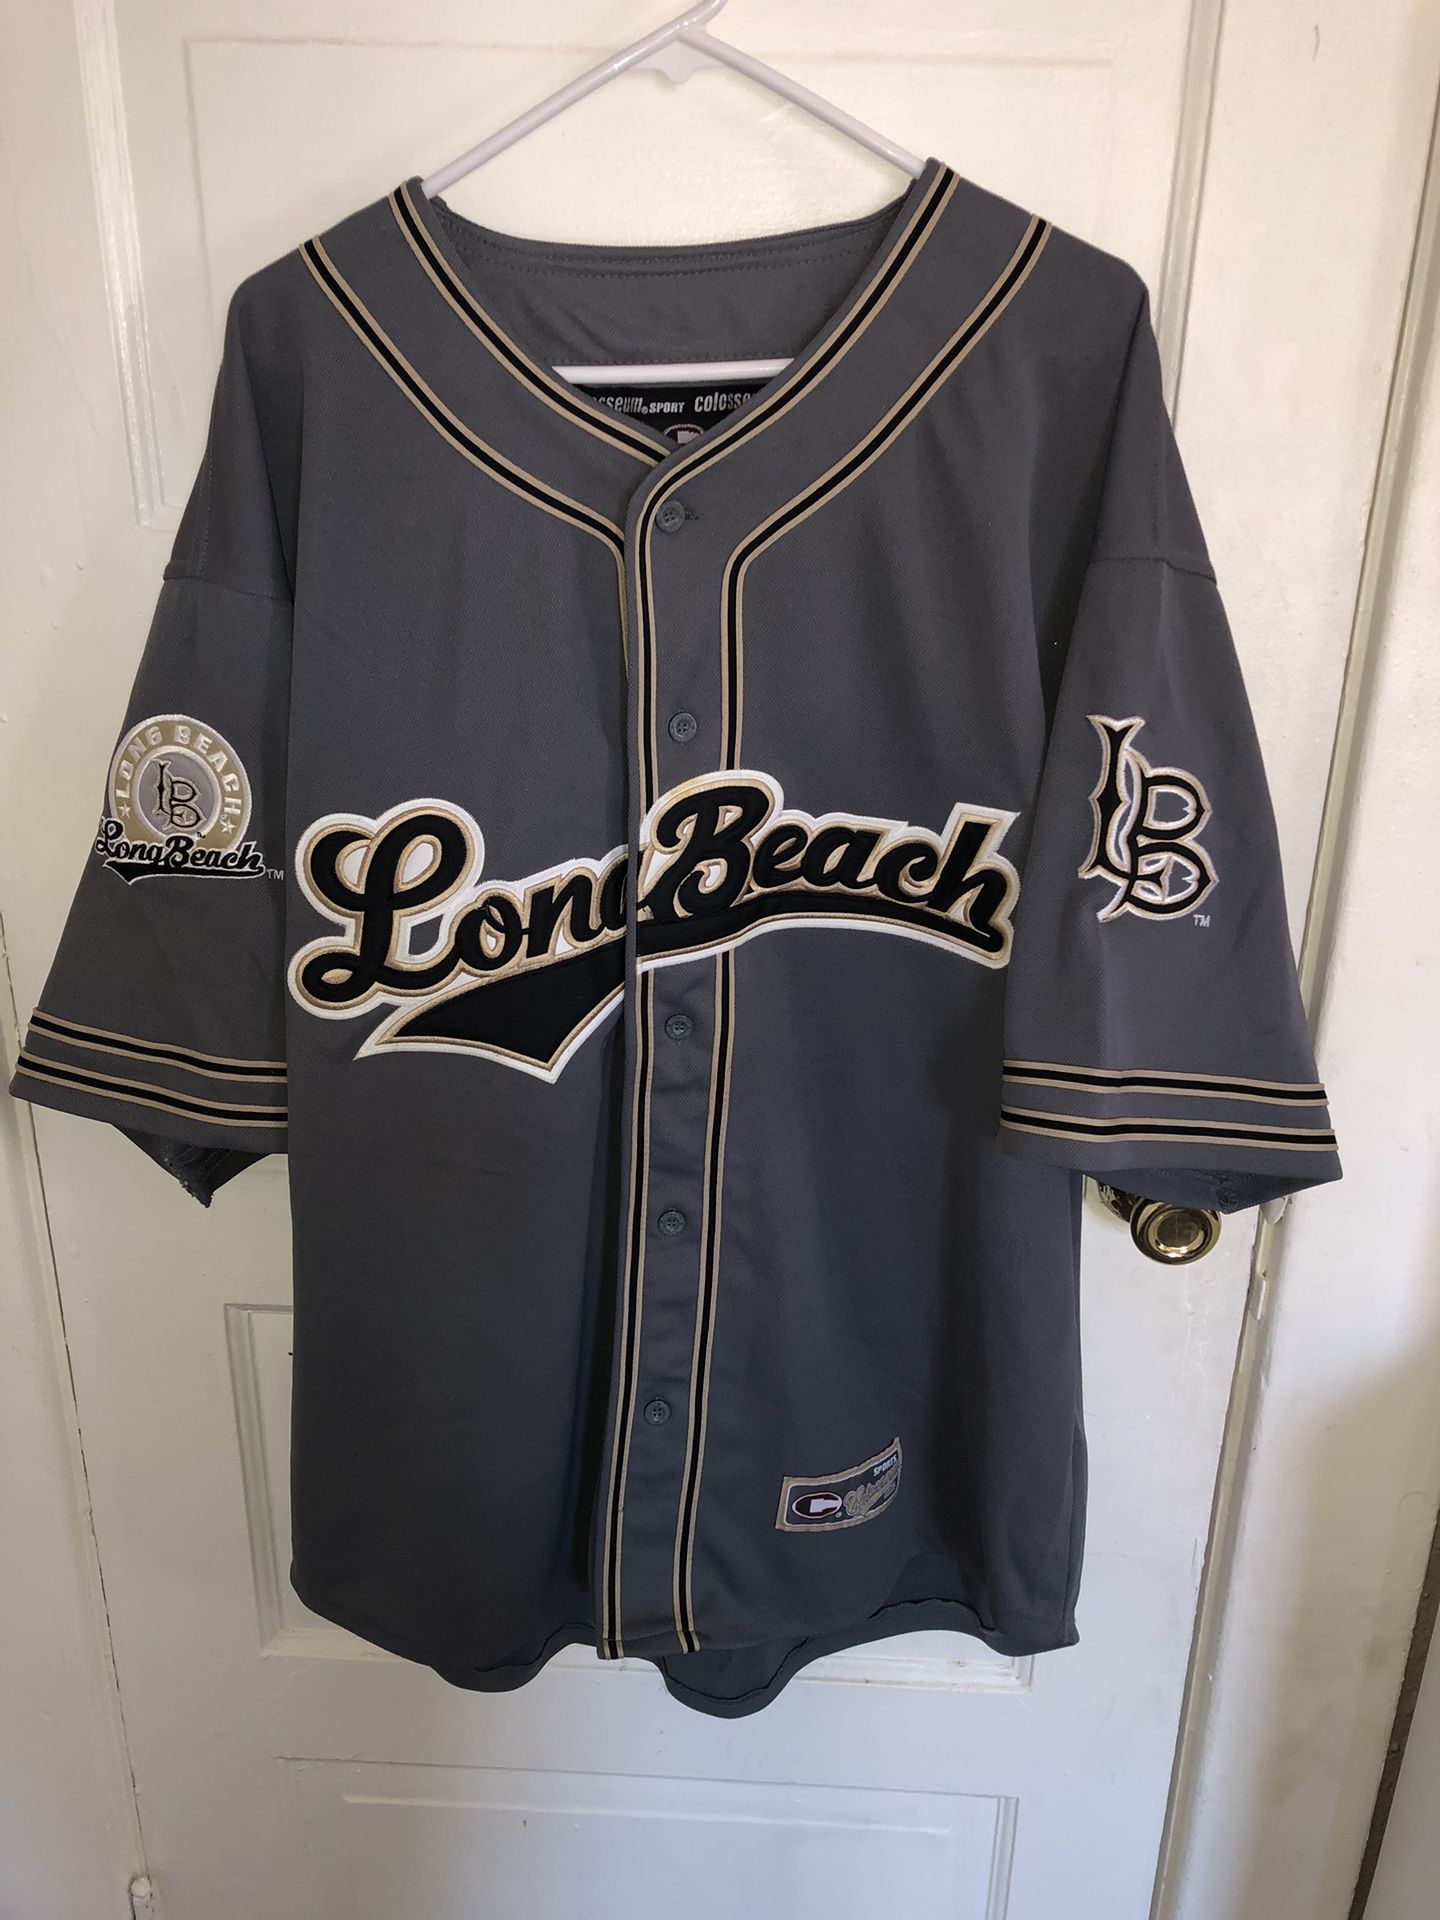 Long Beach Authentic Vintage Jersey 